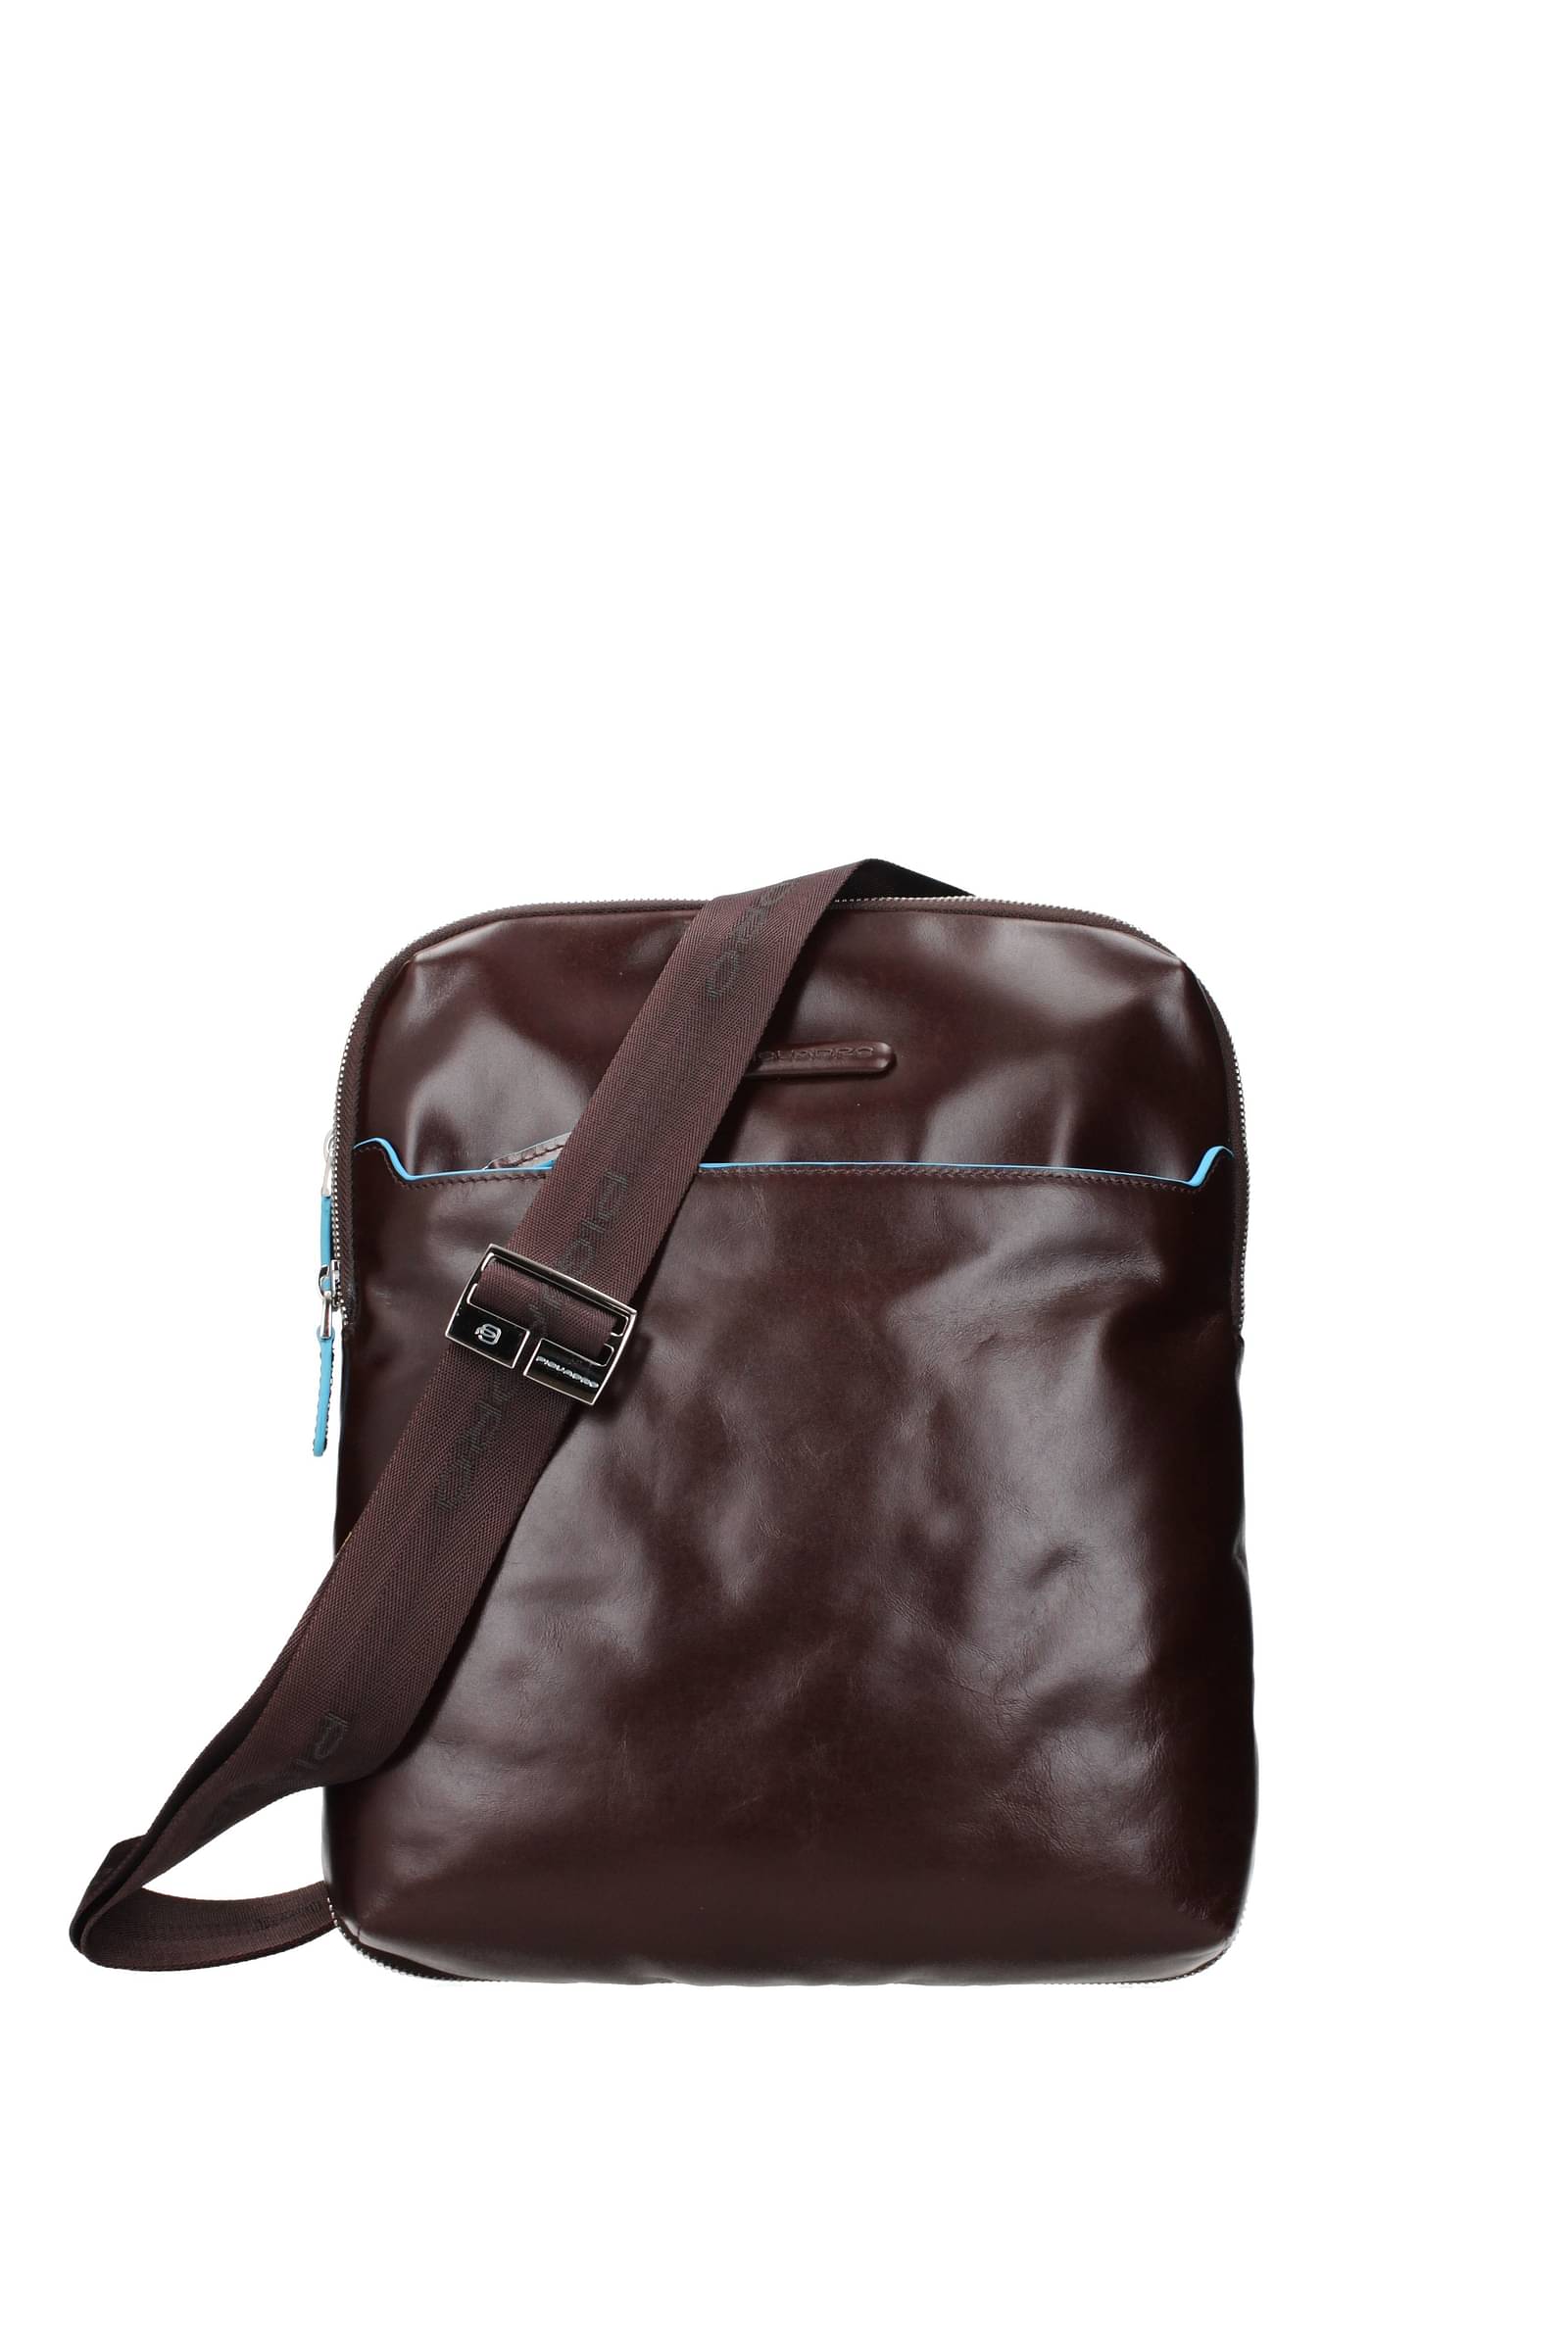 Fashion Bag PIQUADRO Man Shoulder Bag Blue - CA1816W129-BLU | eBay